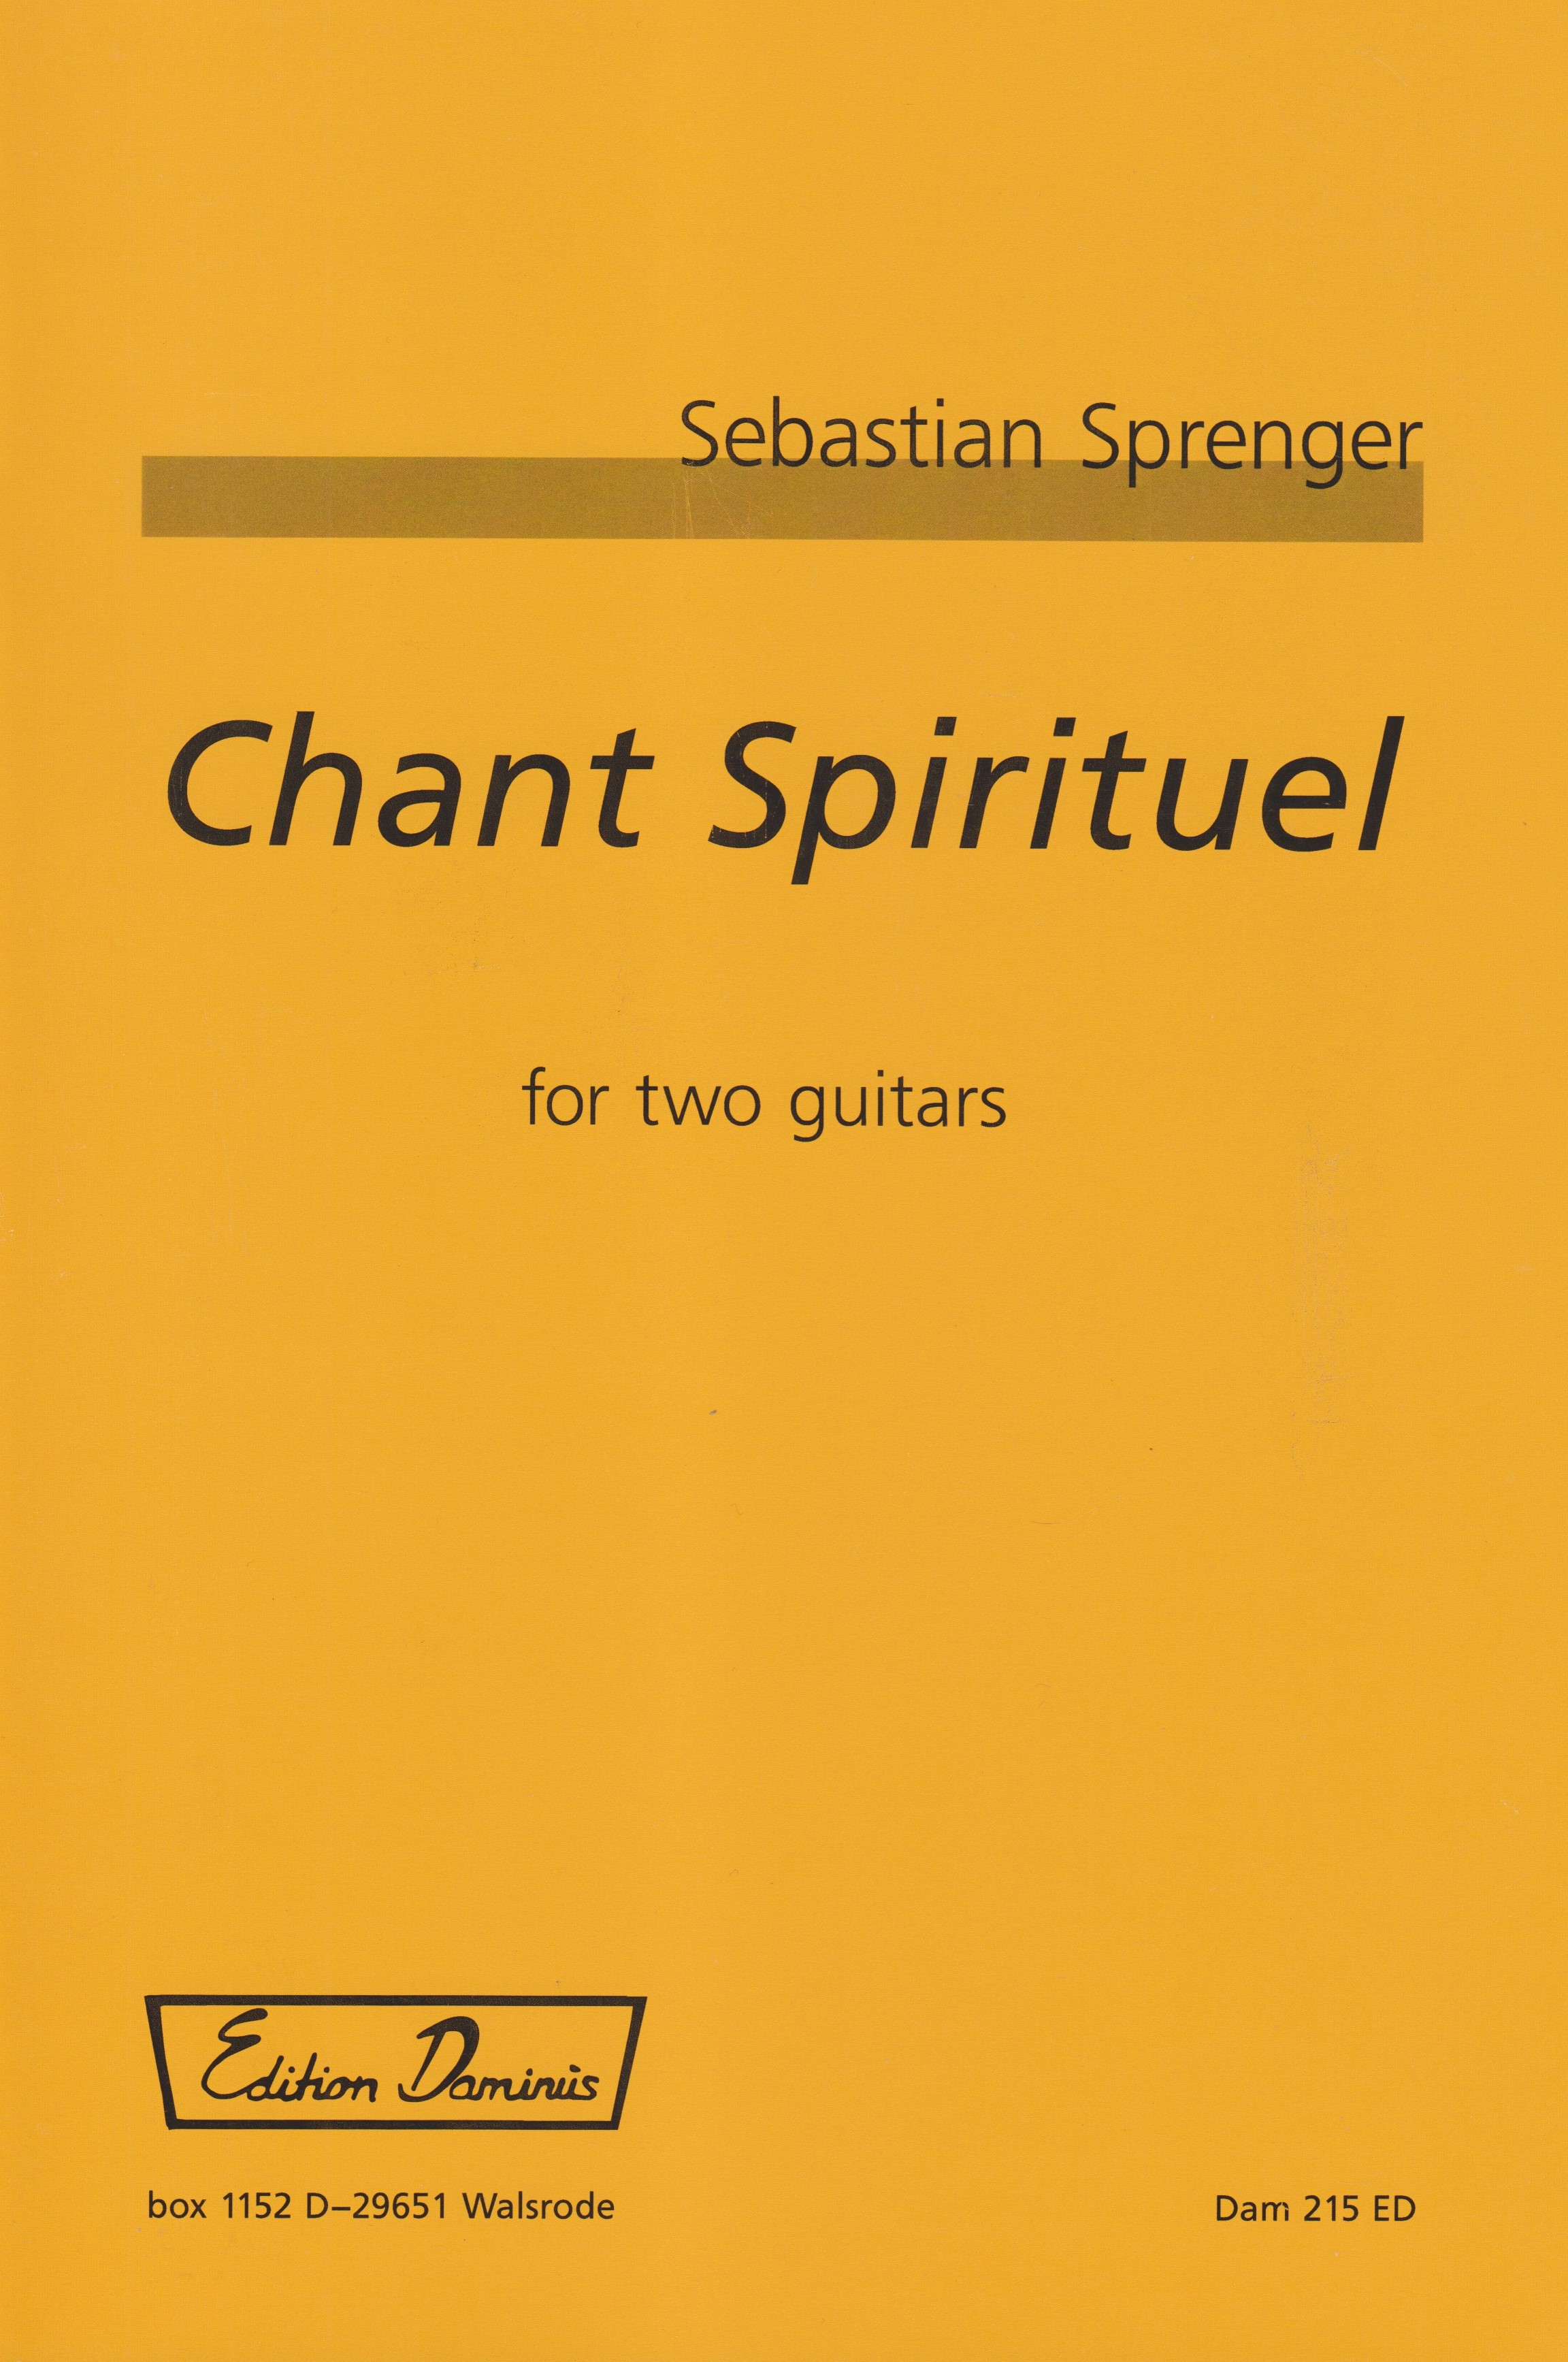 Chant spirituel